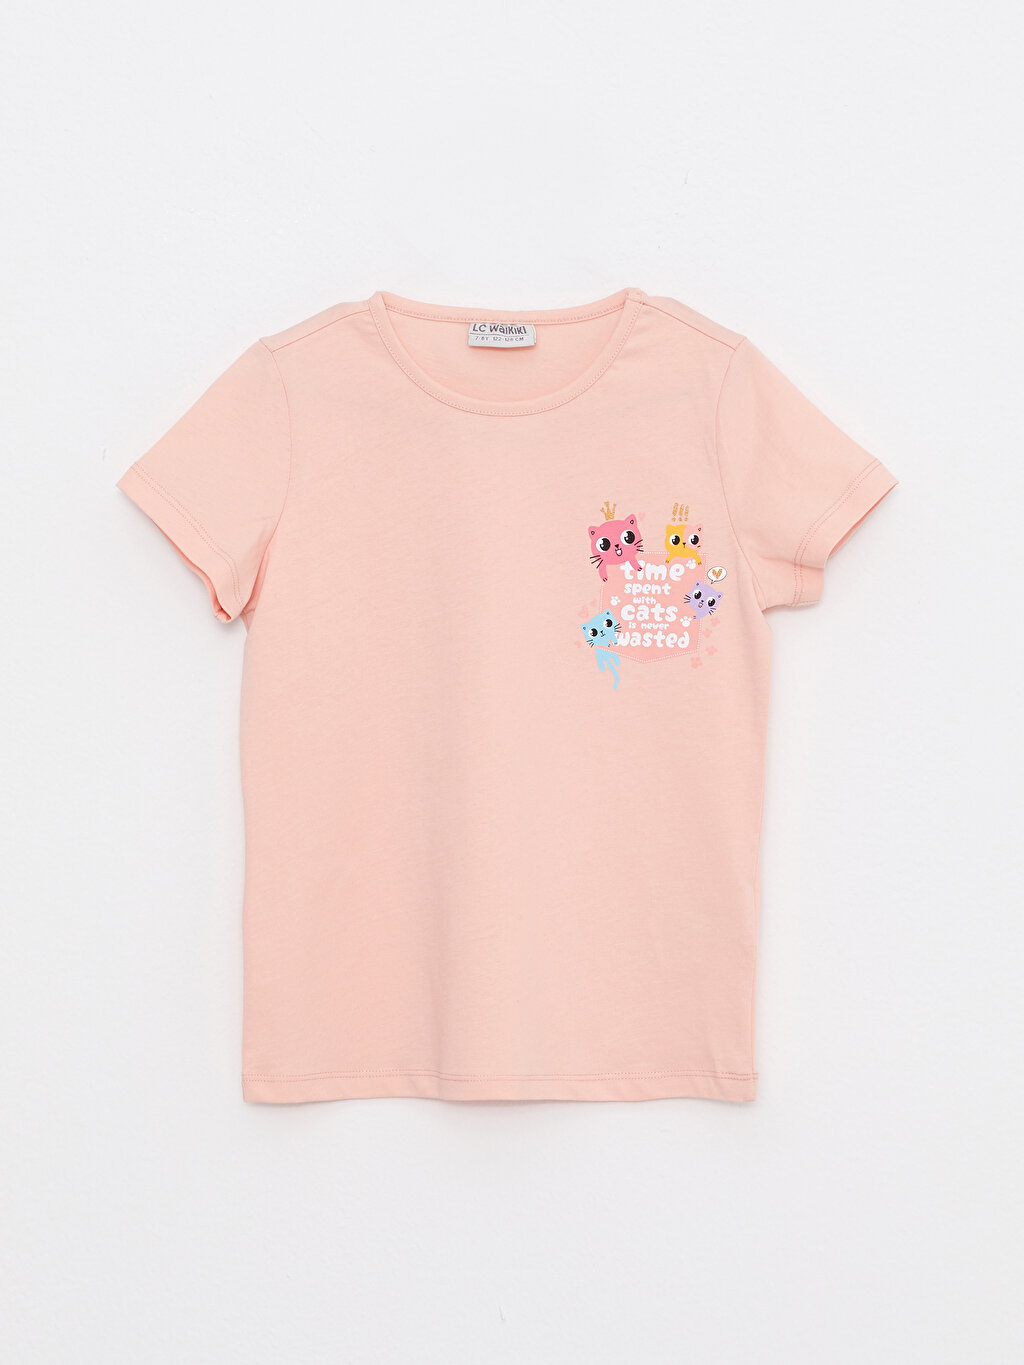 Crew Neck Printed Short Sleeve Cotton Girls T-Shirt -S22199Z4-FXB 